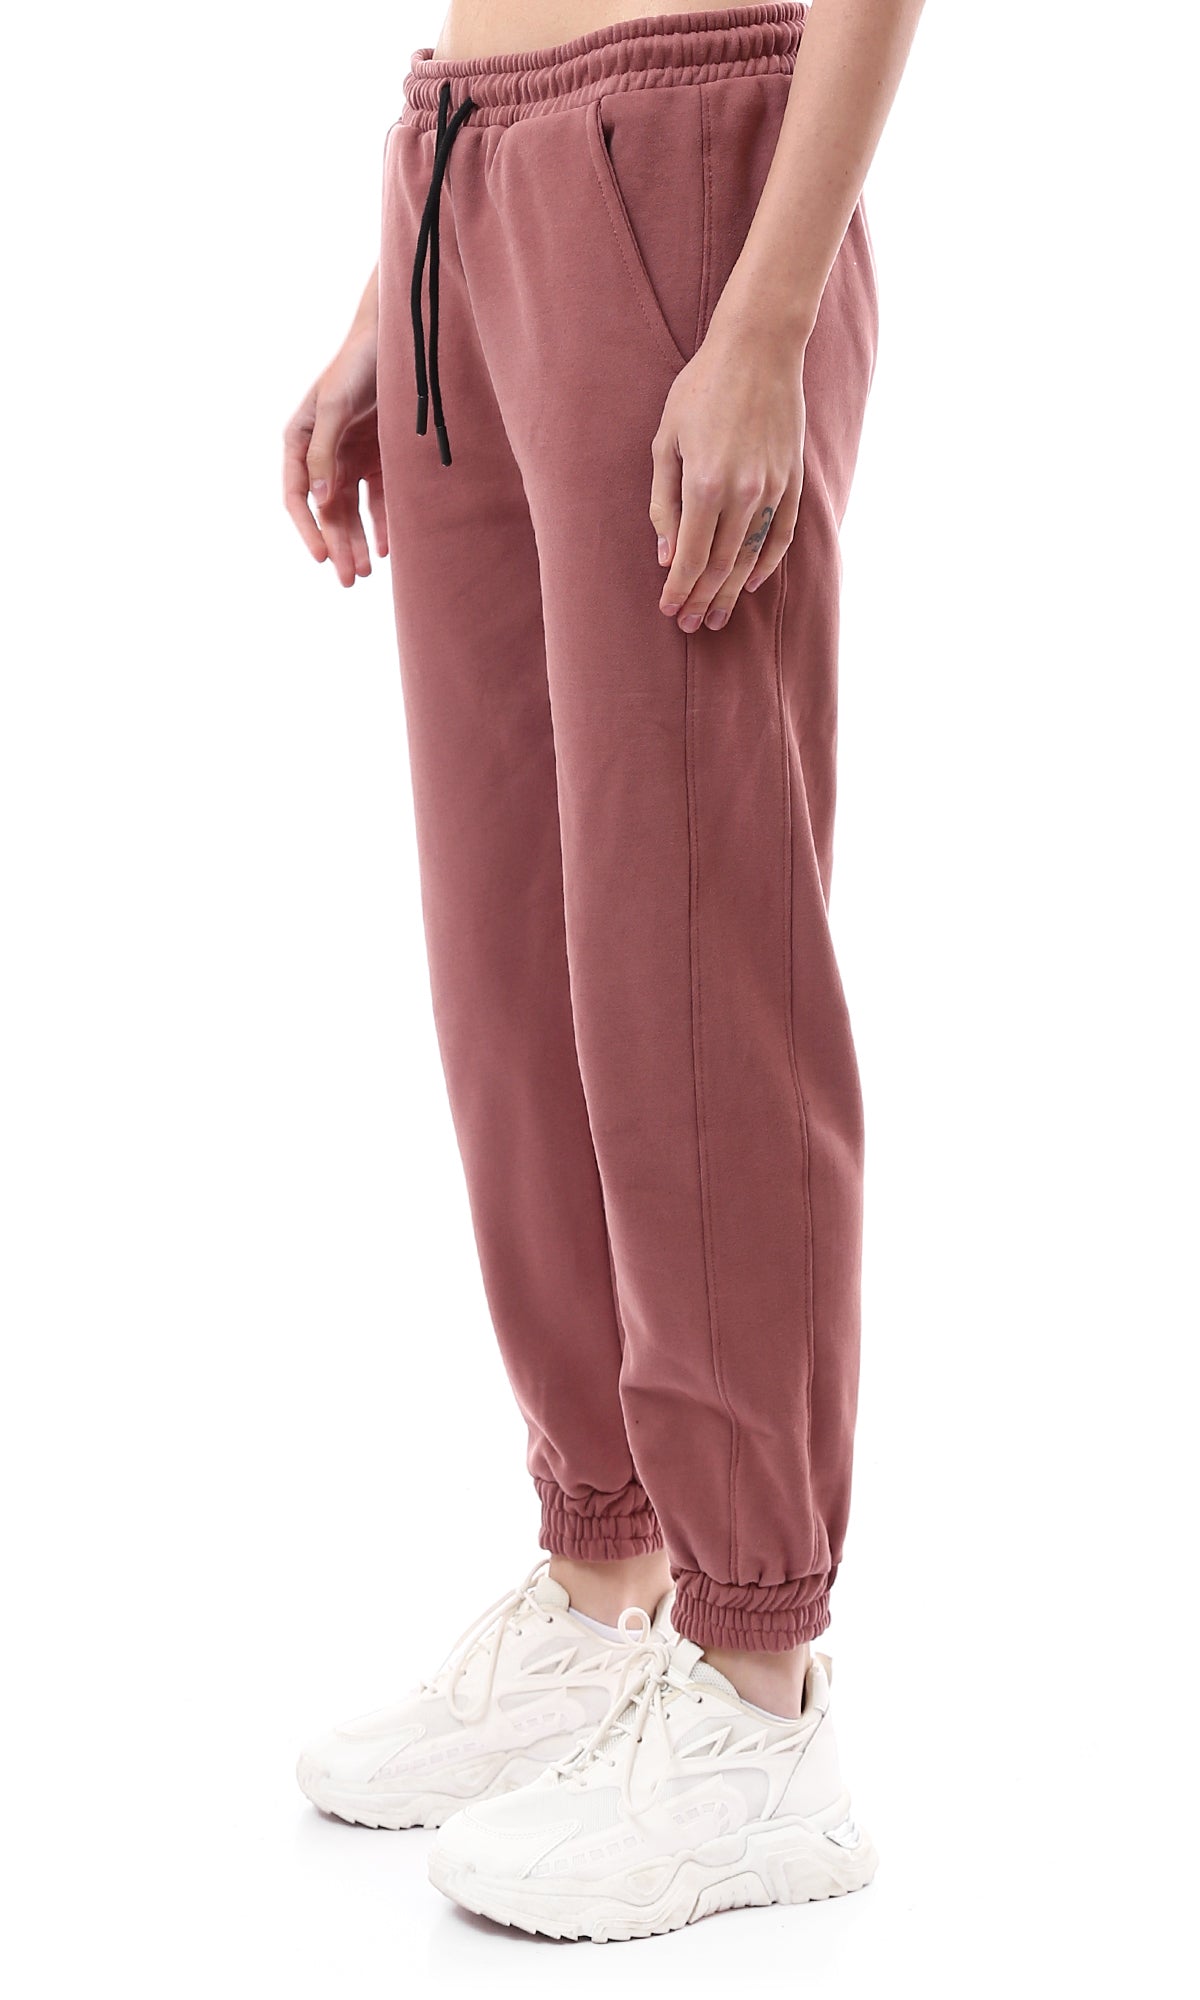 O176753 Dark Nude Pink Coziness Slip On Cotton Jogger Pants